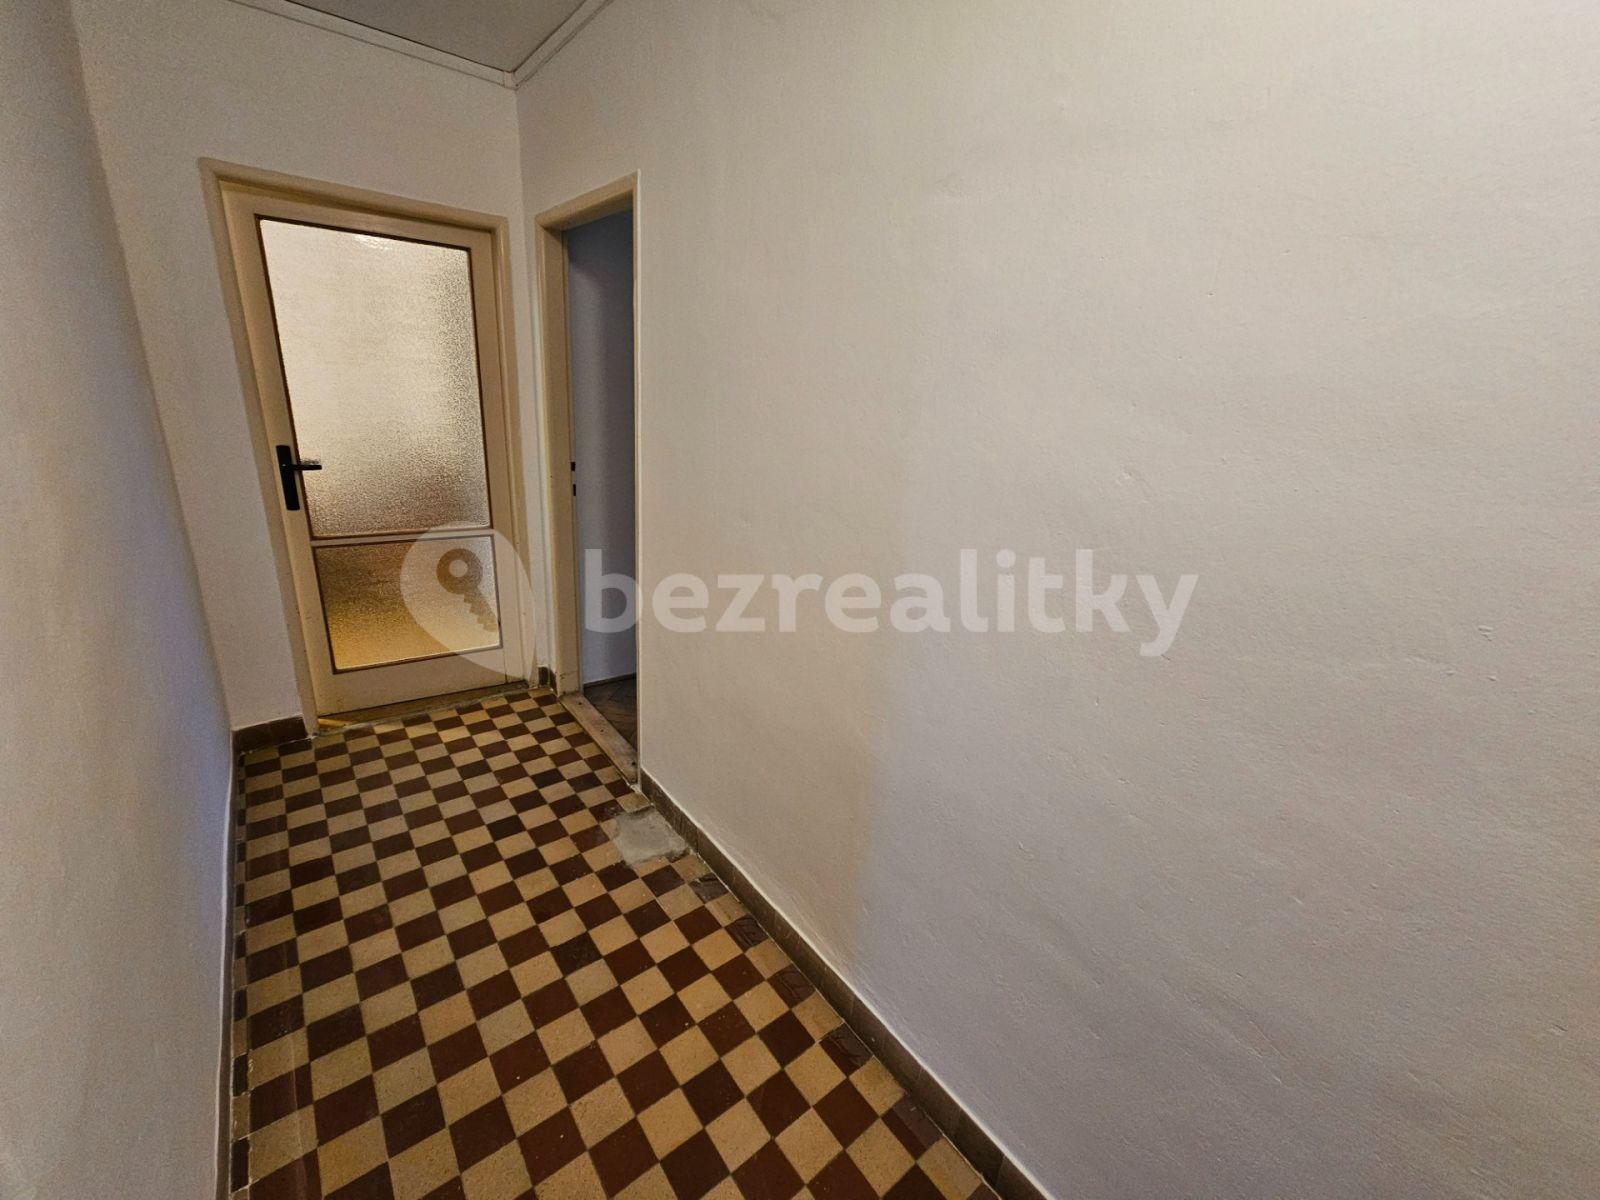 Predaj bytu 2-izbový 55 m², Družstevní, Náměšť nad Oslavou, Kraj Vysočina